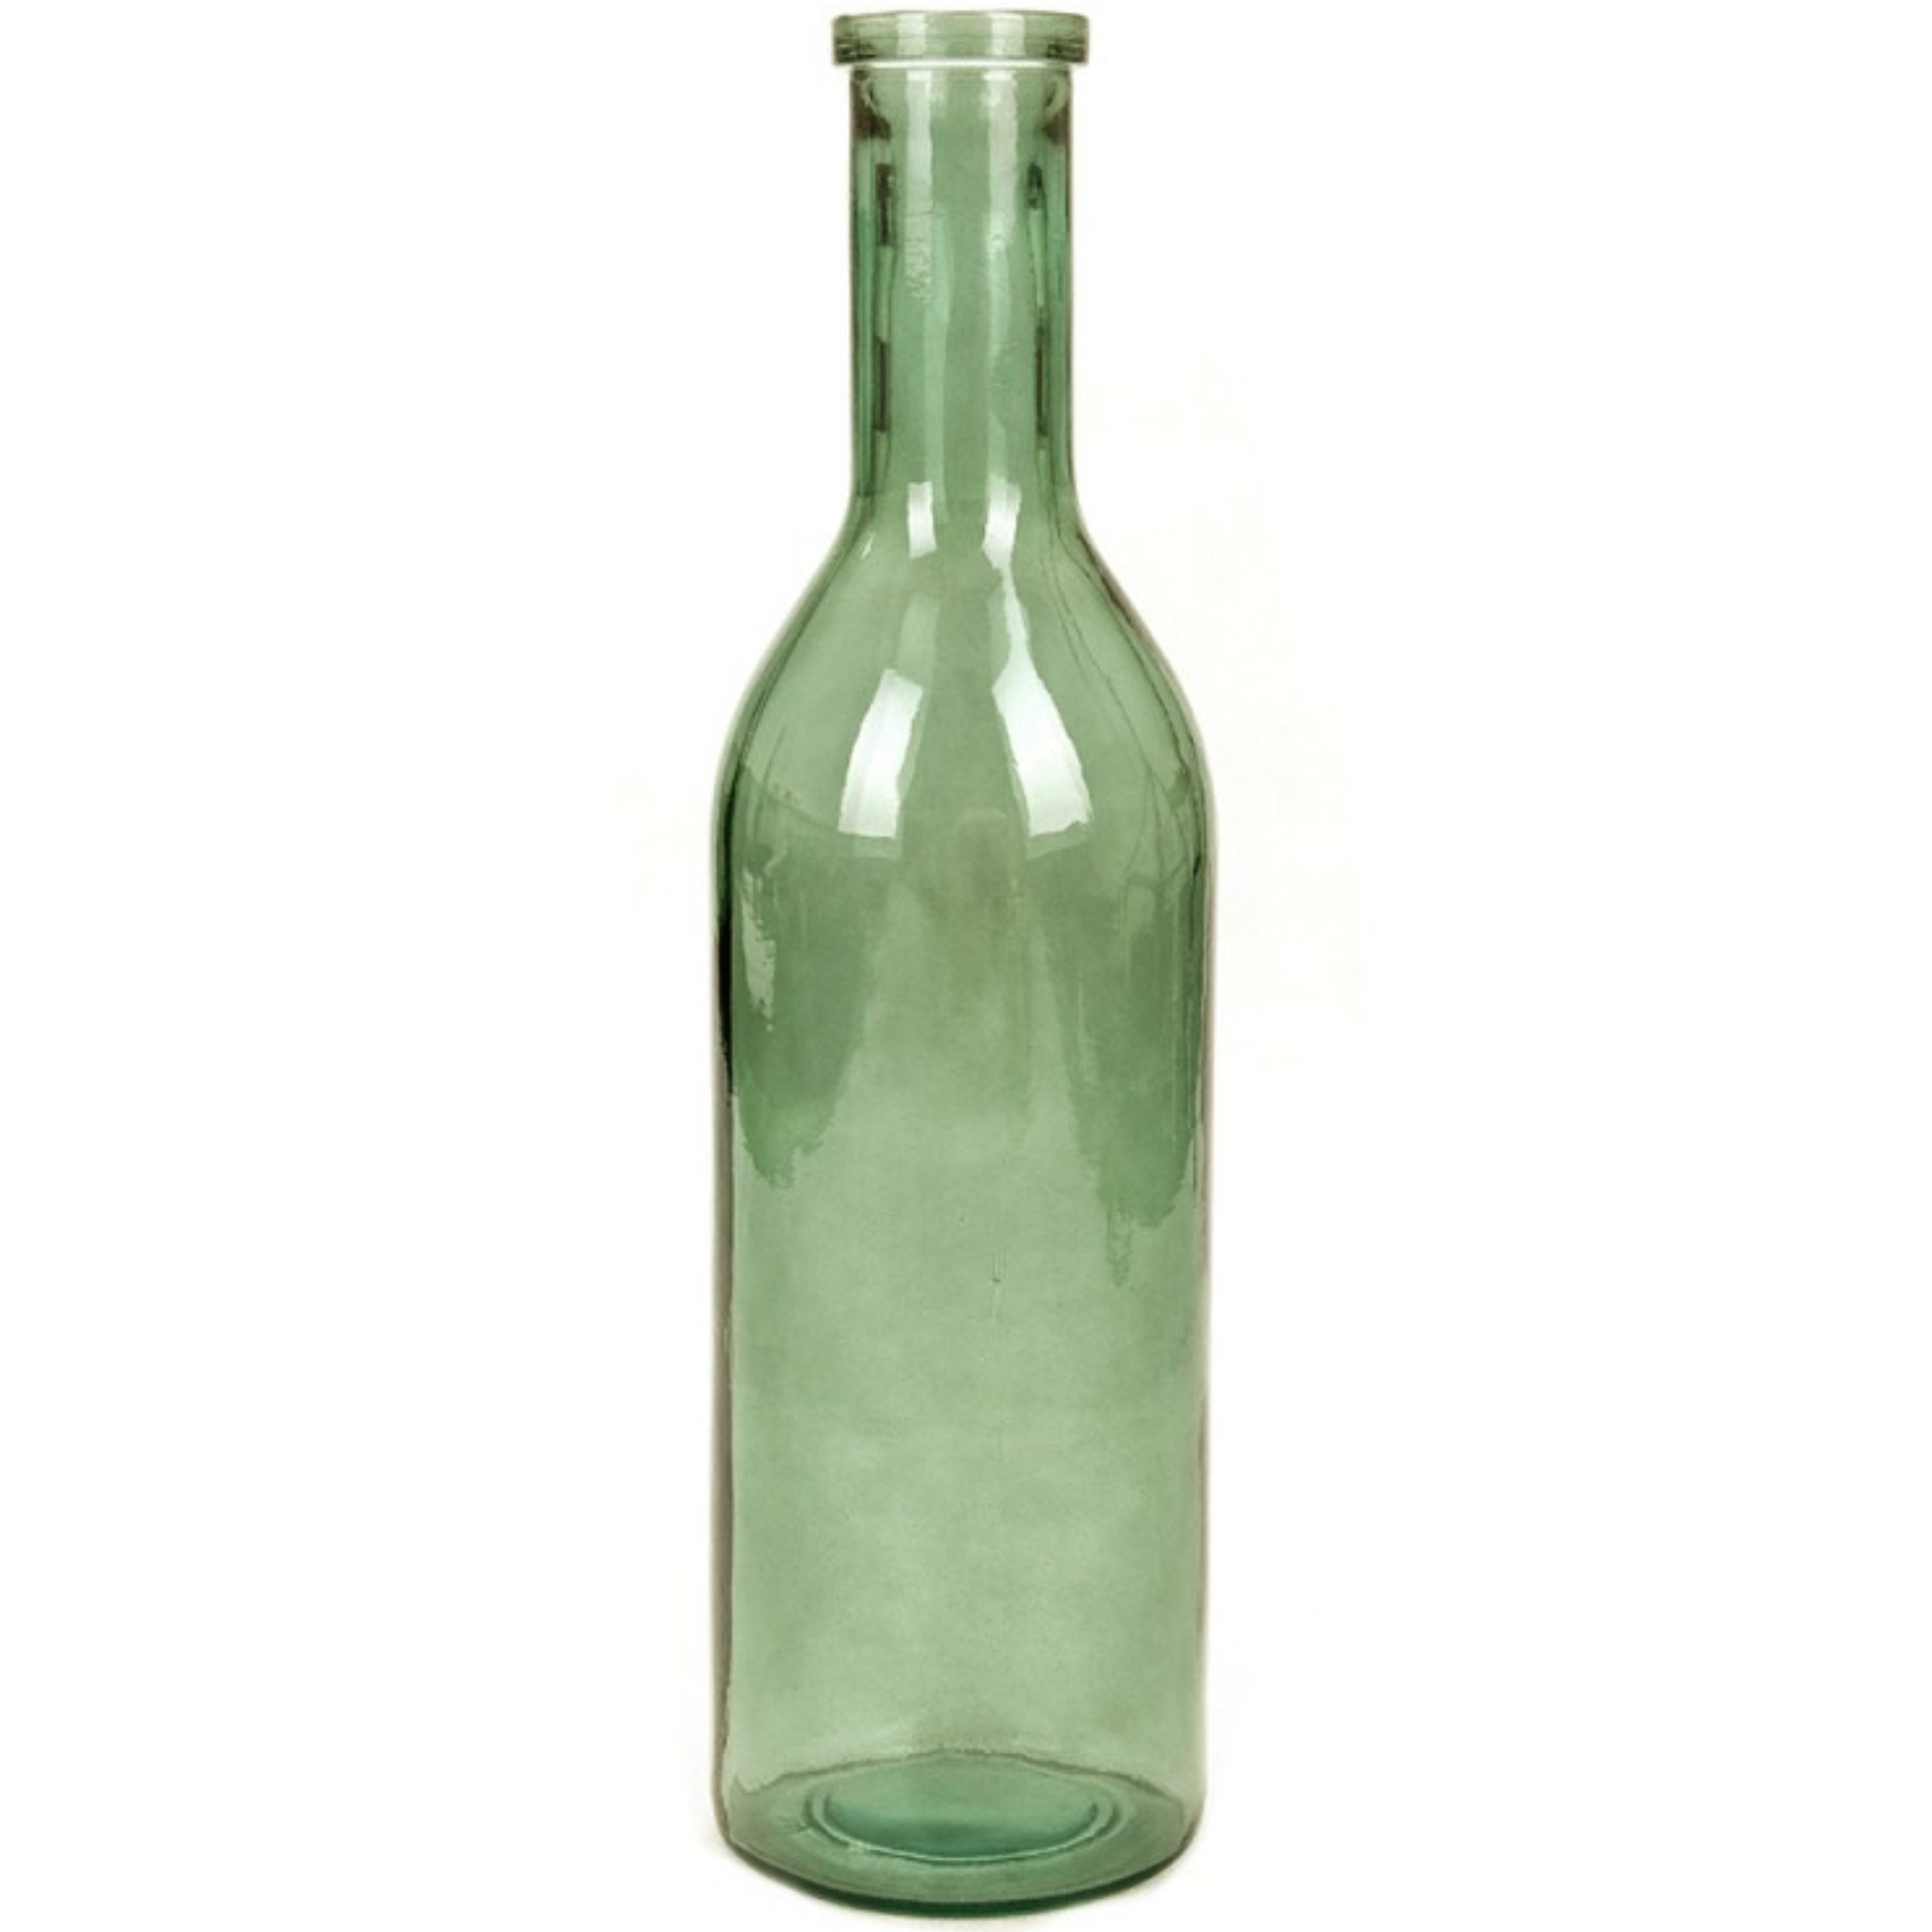 Transparante-groene fles vaas-vazen van eco glas 18 x 75 cm